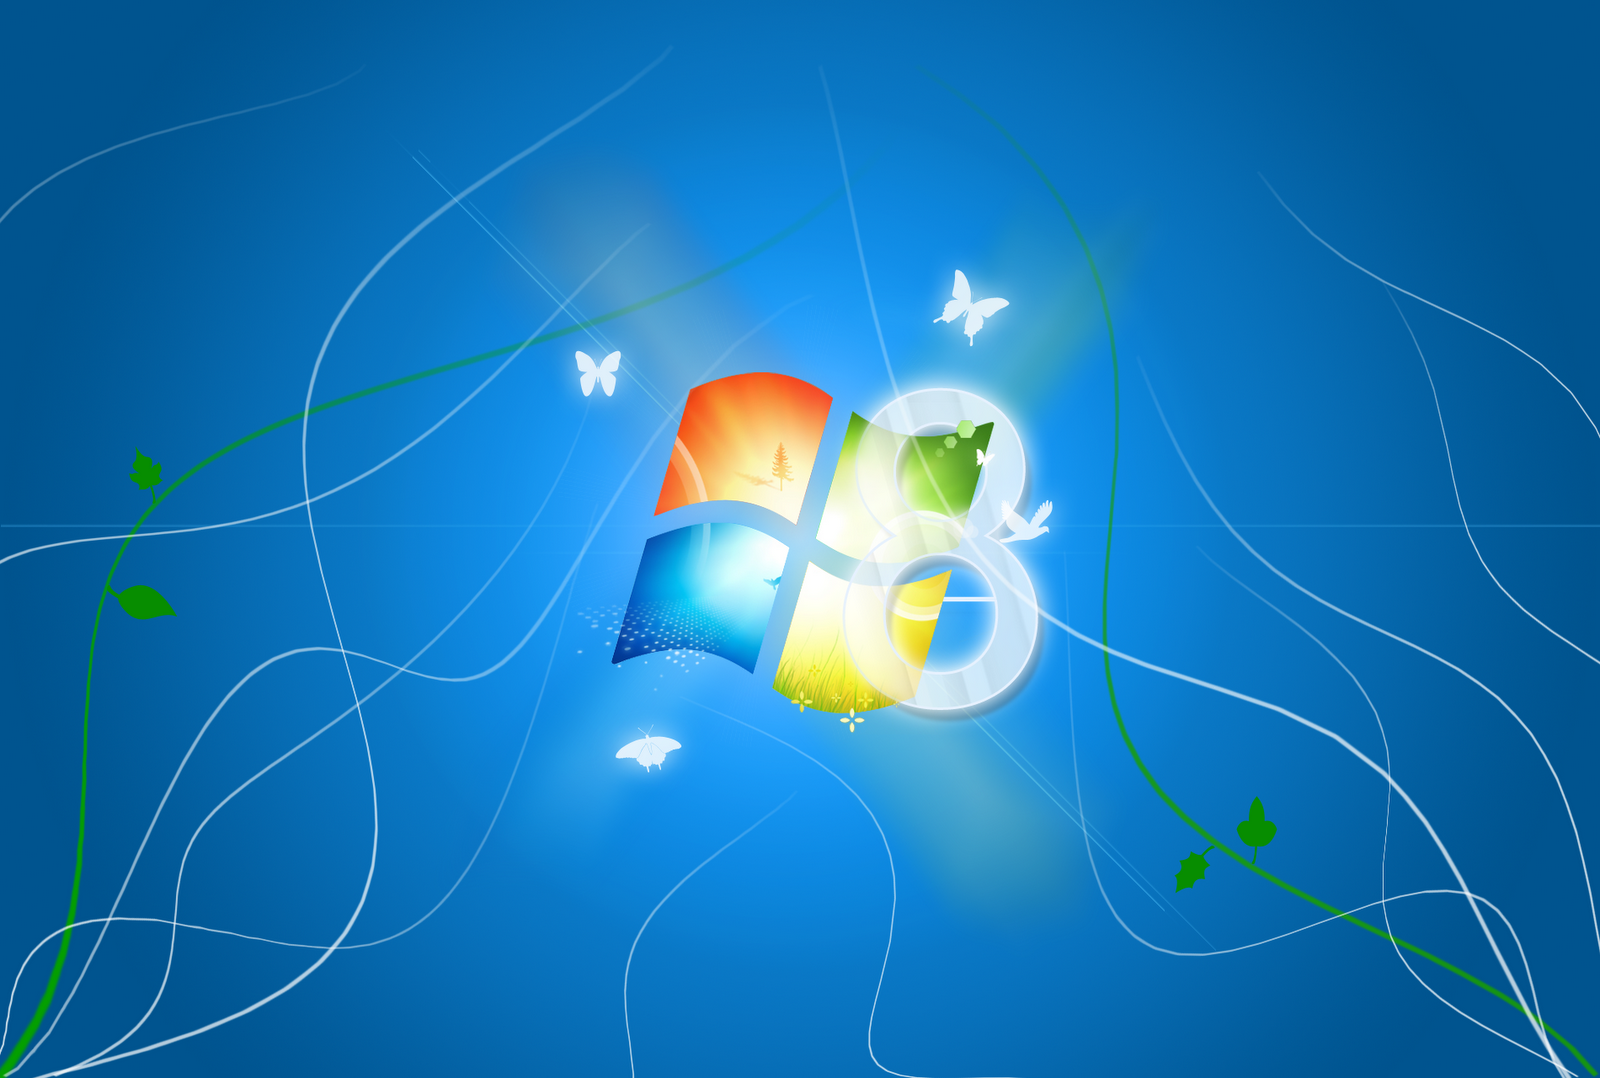 Windows 8 Wallpaper HD Wallpaper Background For Desktop